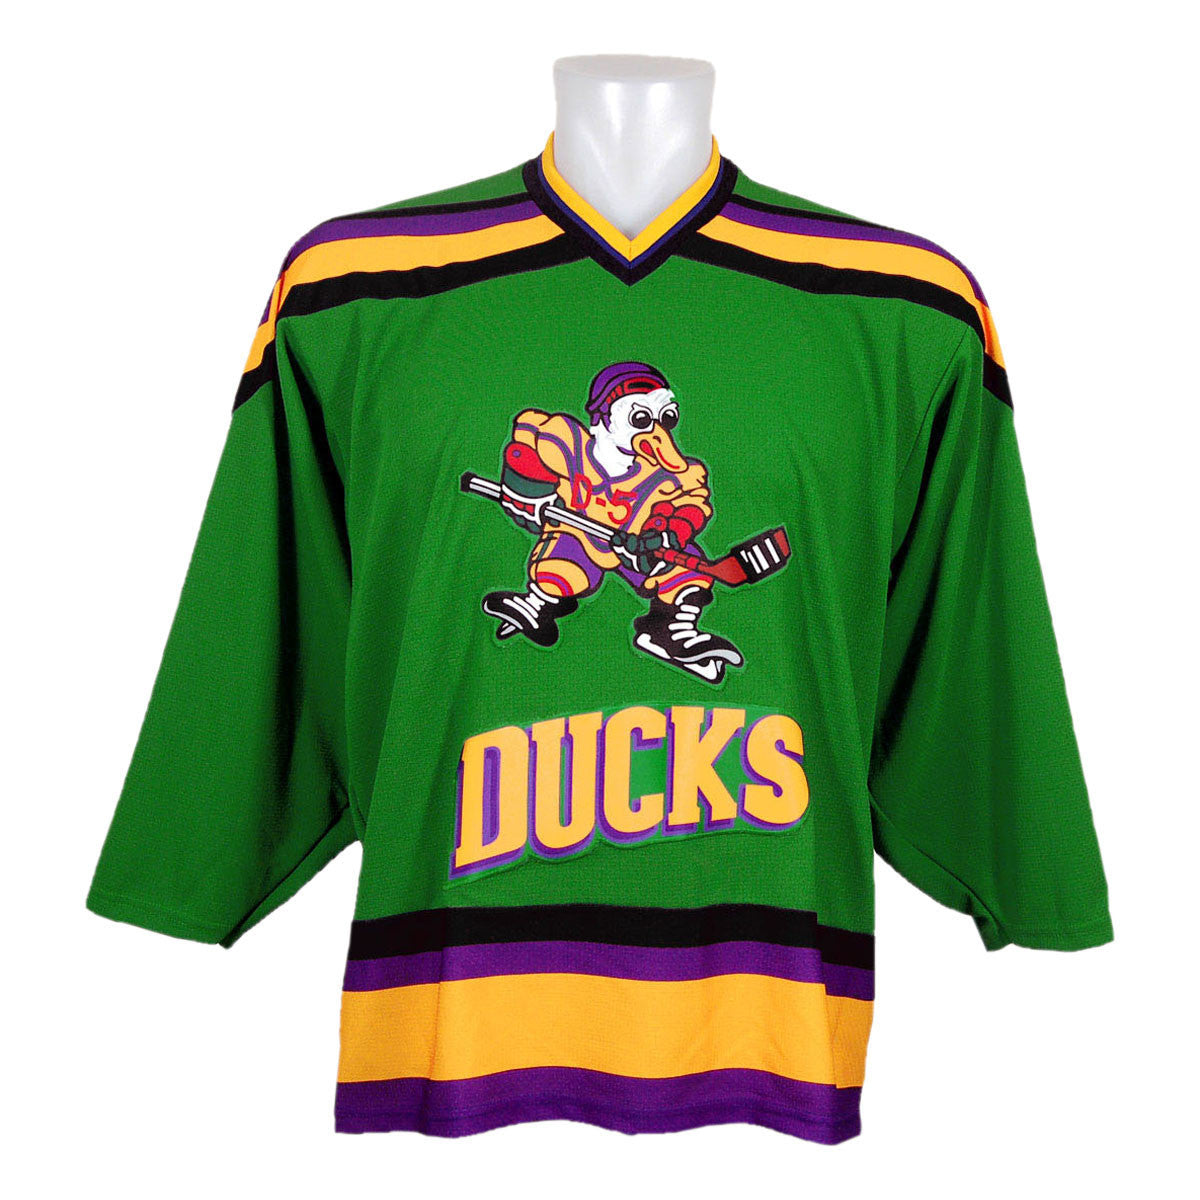 the mighty ducks jersey movie